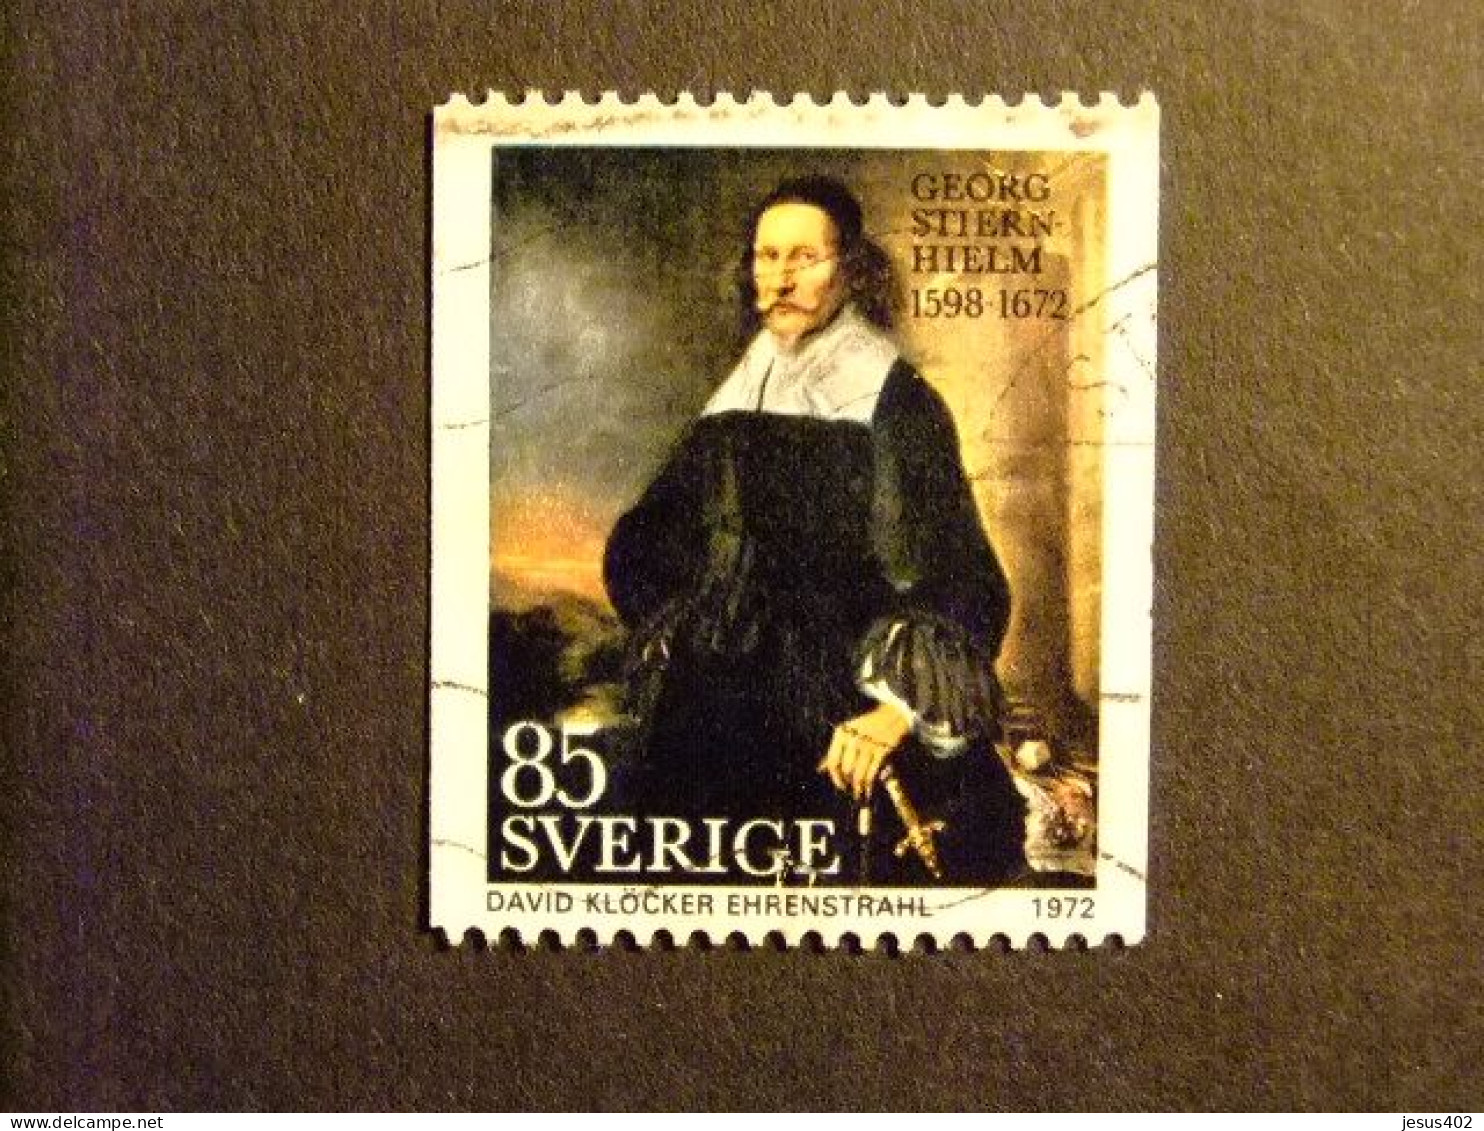 90 SUECIA SUEDE 1972 / GEORG STIERNHIELM / YVERT 724 FU - Used Stamps